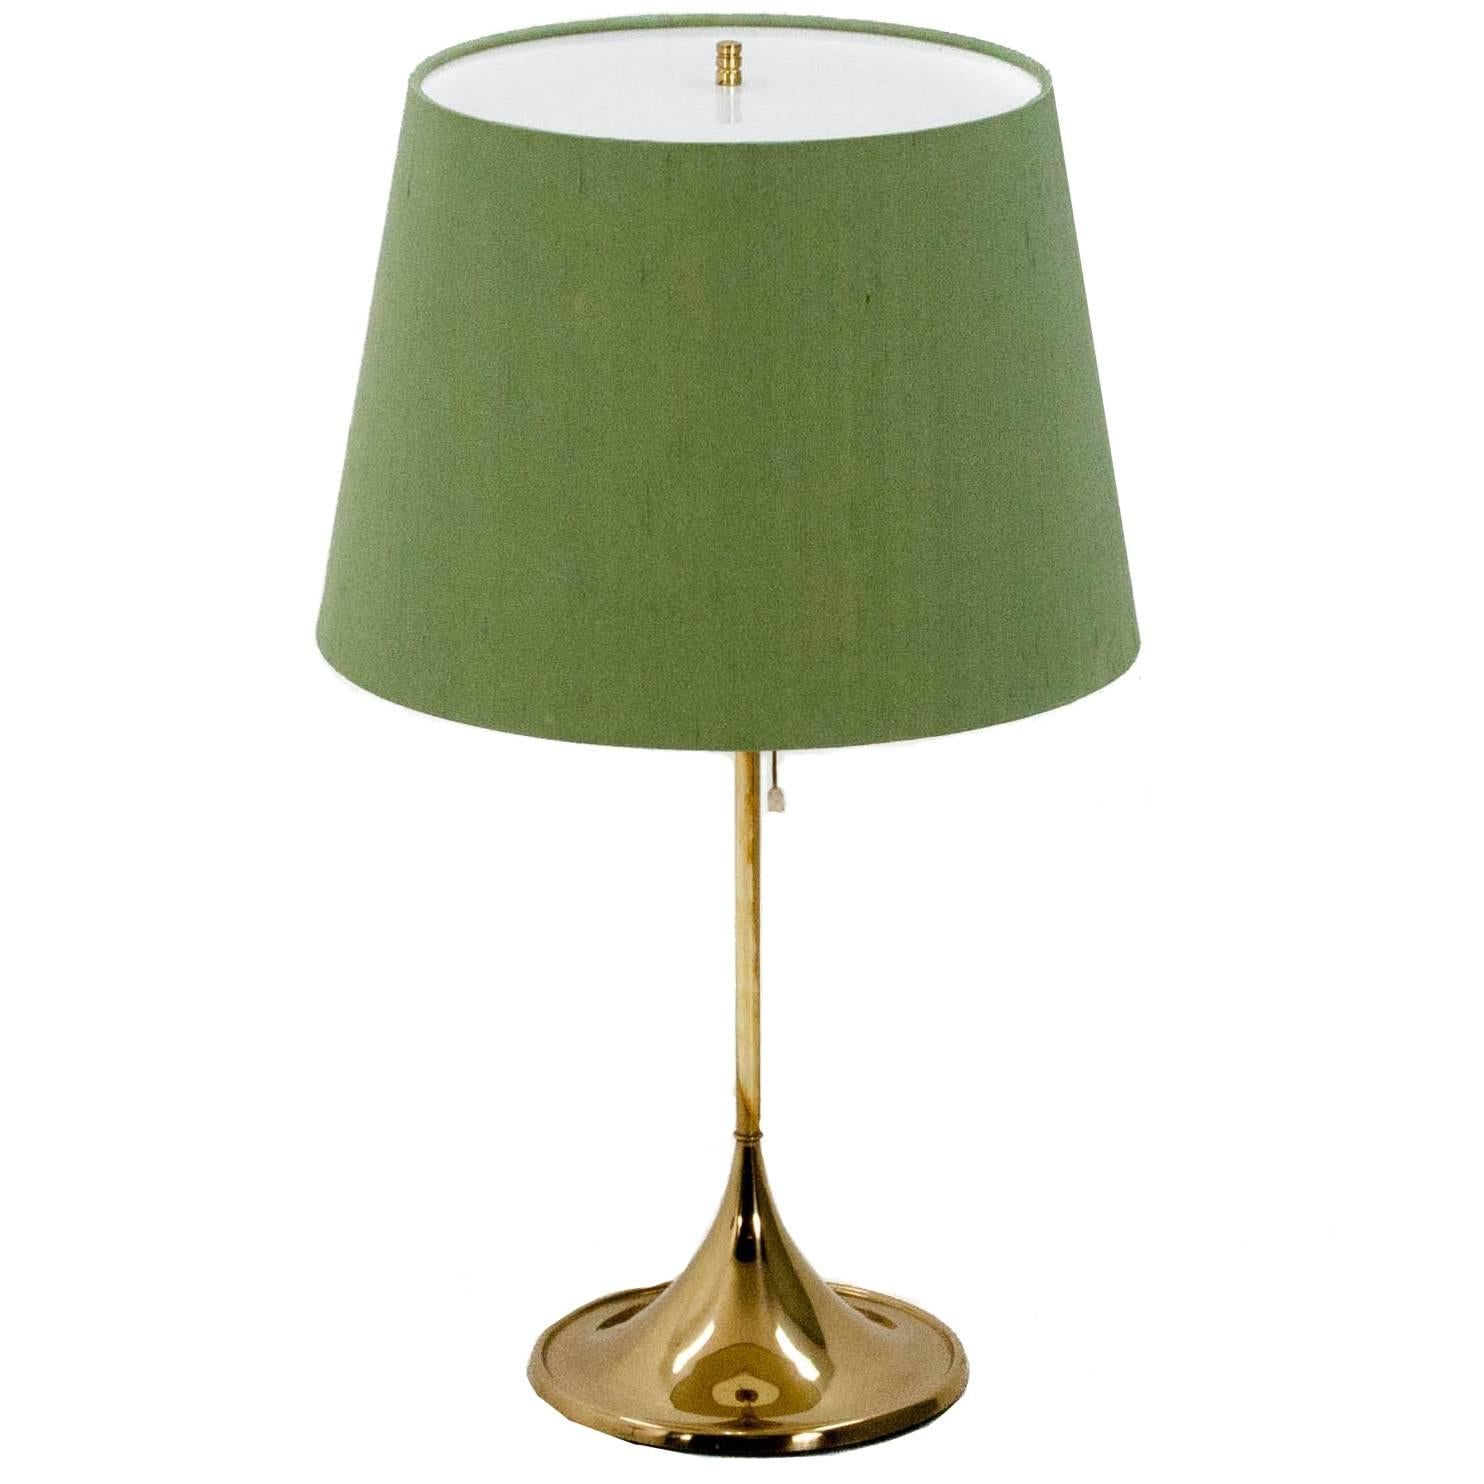 Bergbom B-024 Table Lamp with Green Shade, 1960s